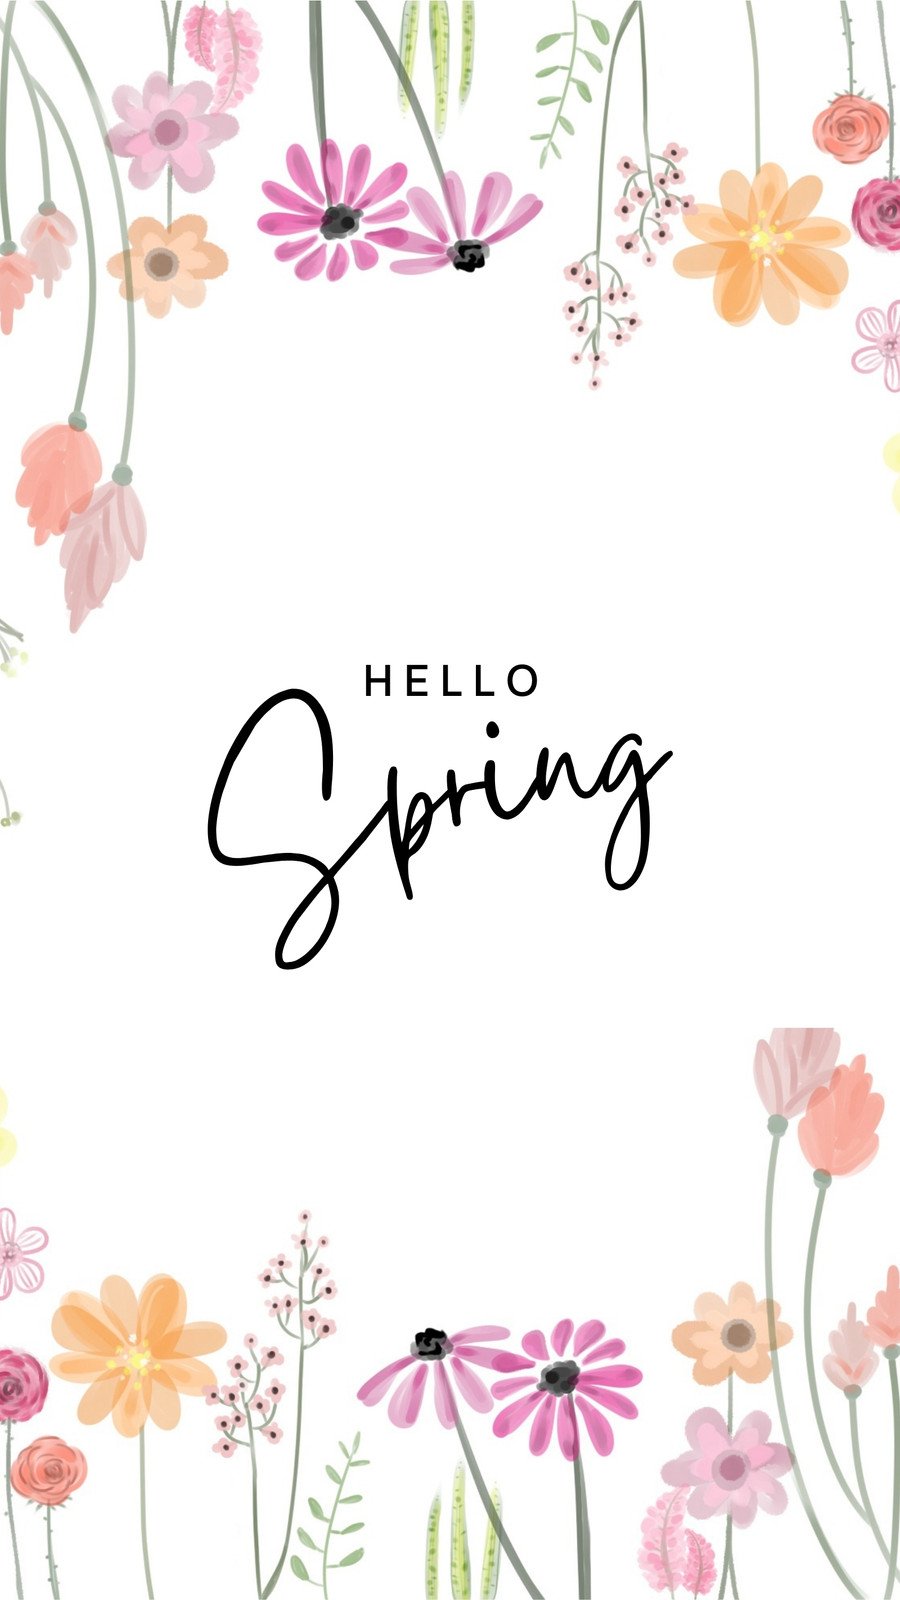 https://marketplace.canva.com/EAE_jORxiLI/1/0/900w/canva-white-minimalist-floral-illustration-hello-spring-instagram-story-L5kj6WS2aWA.jpg